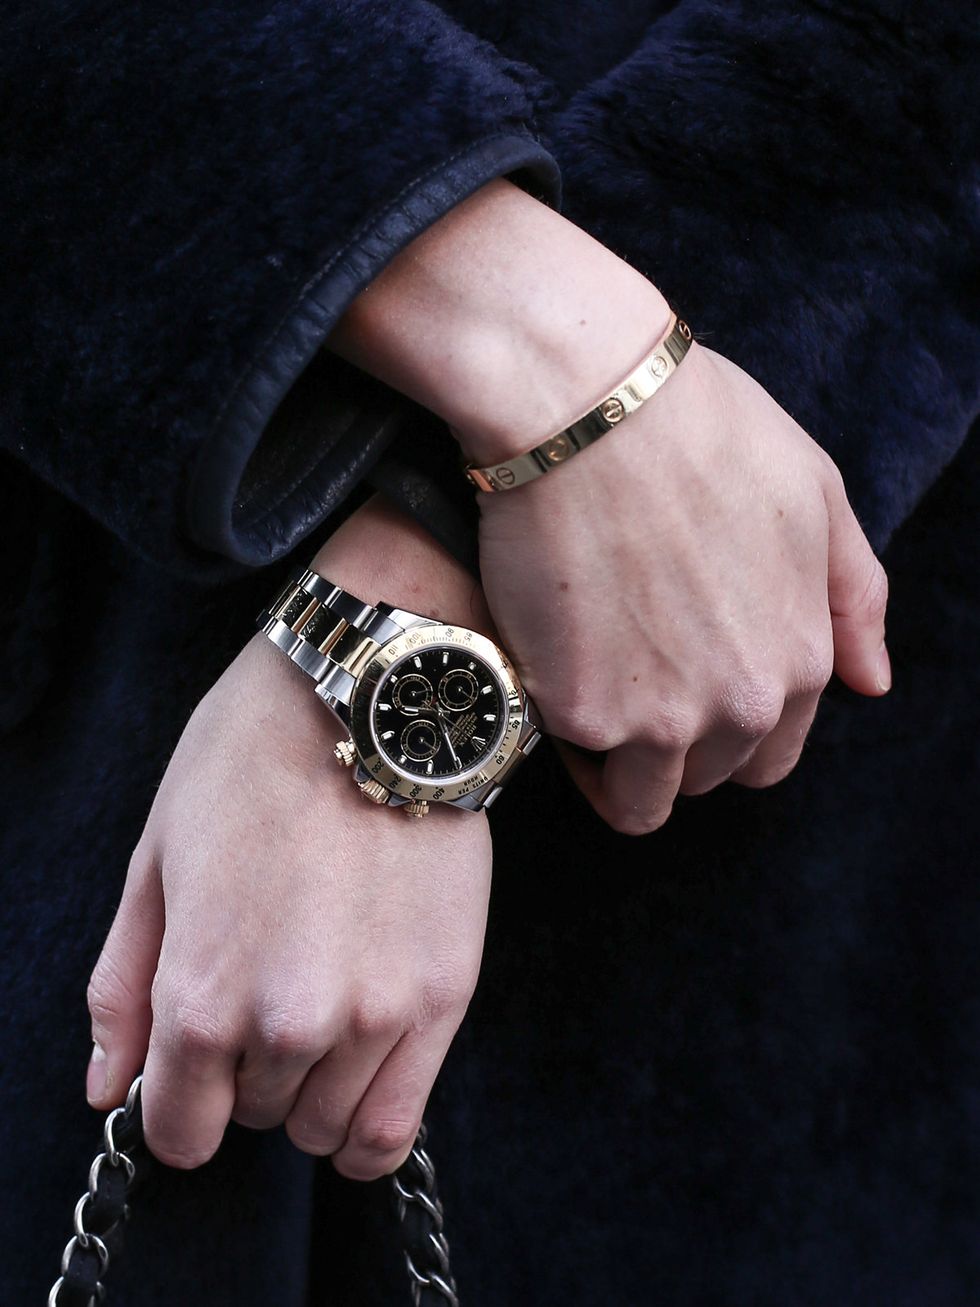 Finger, Wrist, Hand, Analog watch, Fashion accessory, Watch, Watch accessory, Fashion, Cool, Metal, 